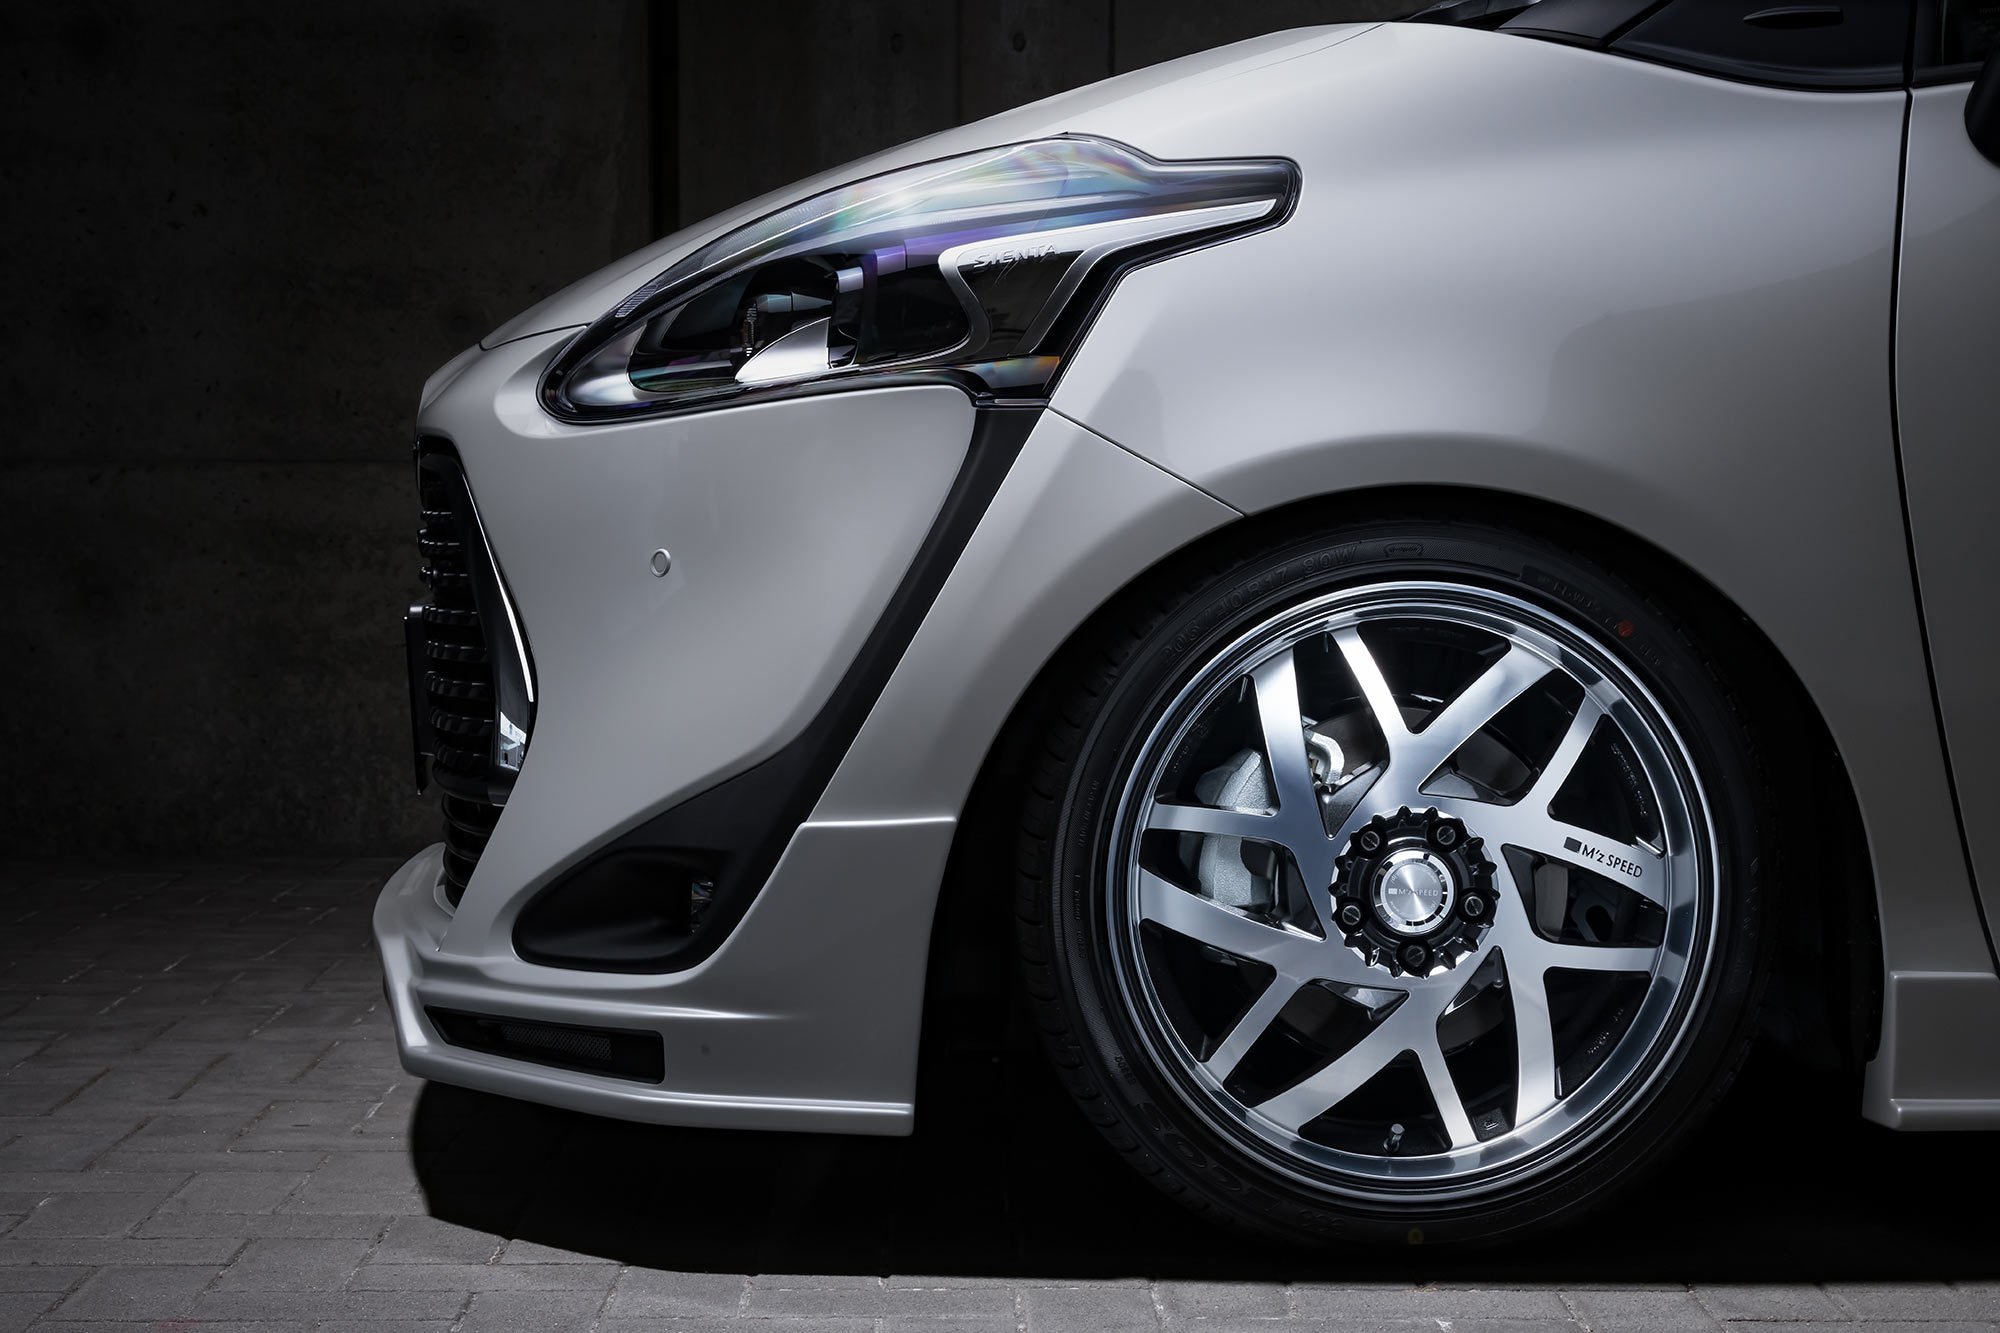 M'z Speed body kit for Toyota Sienta new style